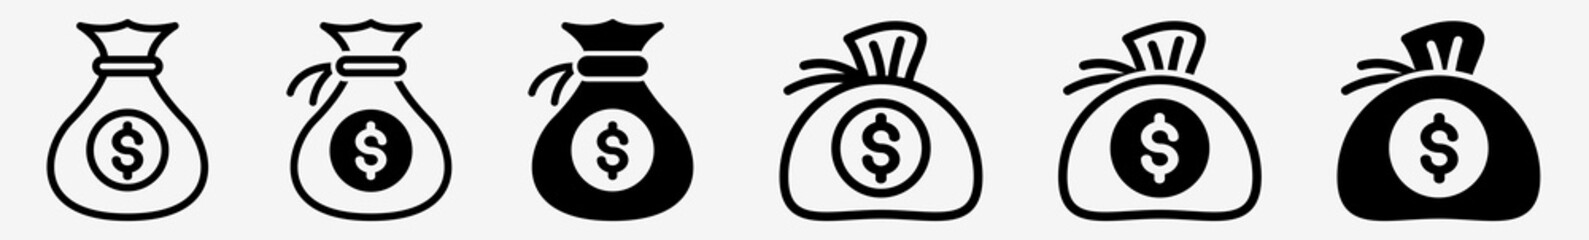 Money Bag Icon Dollar Money Bag Set | Money Bags Icon Sack Cash Vector Illustration Logo | Money Bag Icon Isolated Money Bag Collection